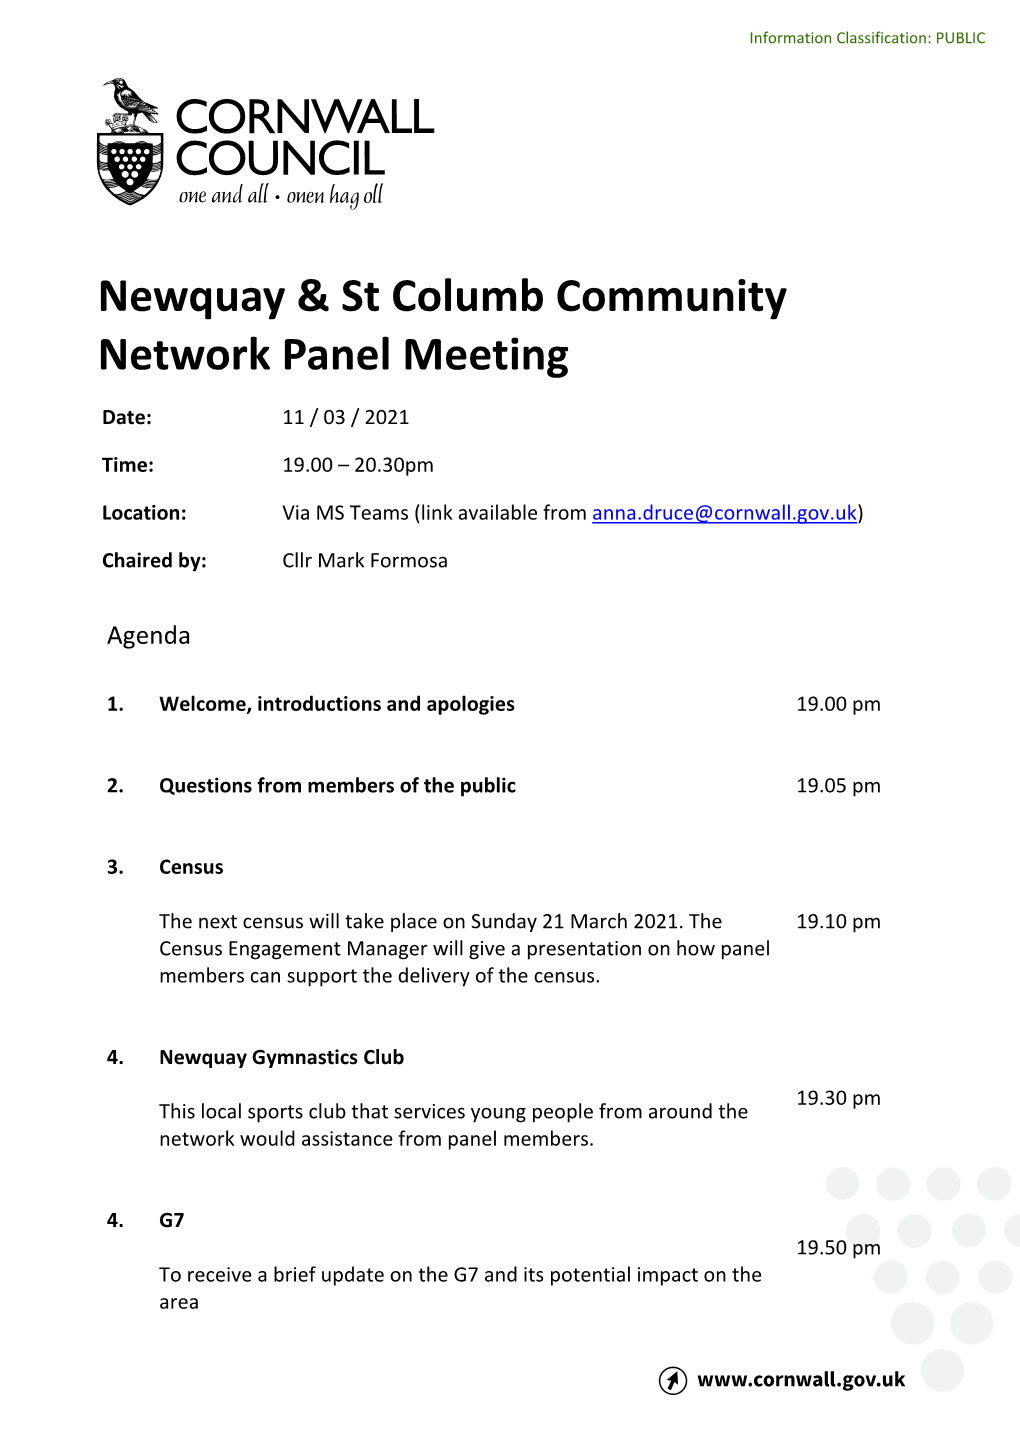 Newquay & St Columb Community Network Panel Meeting